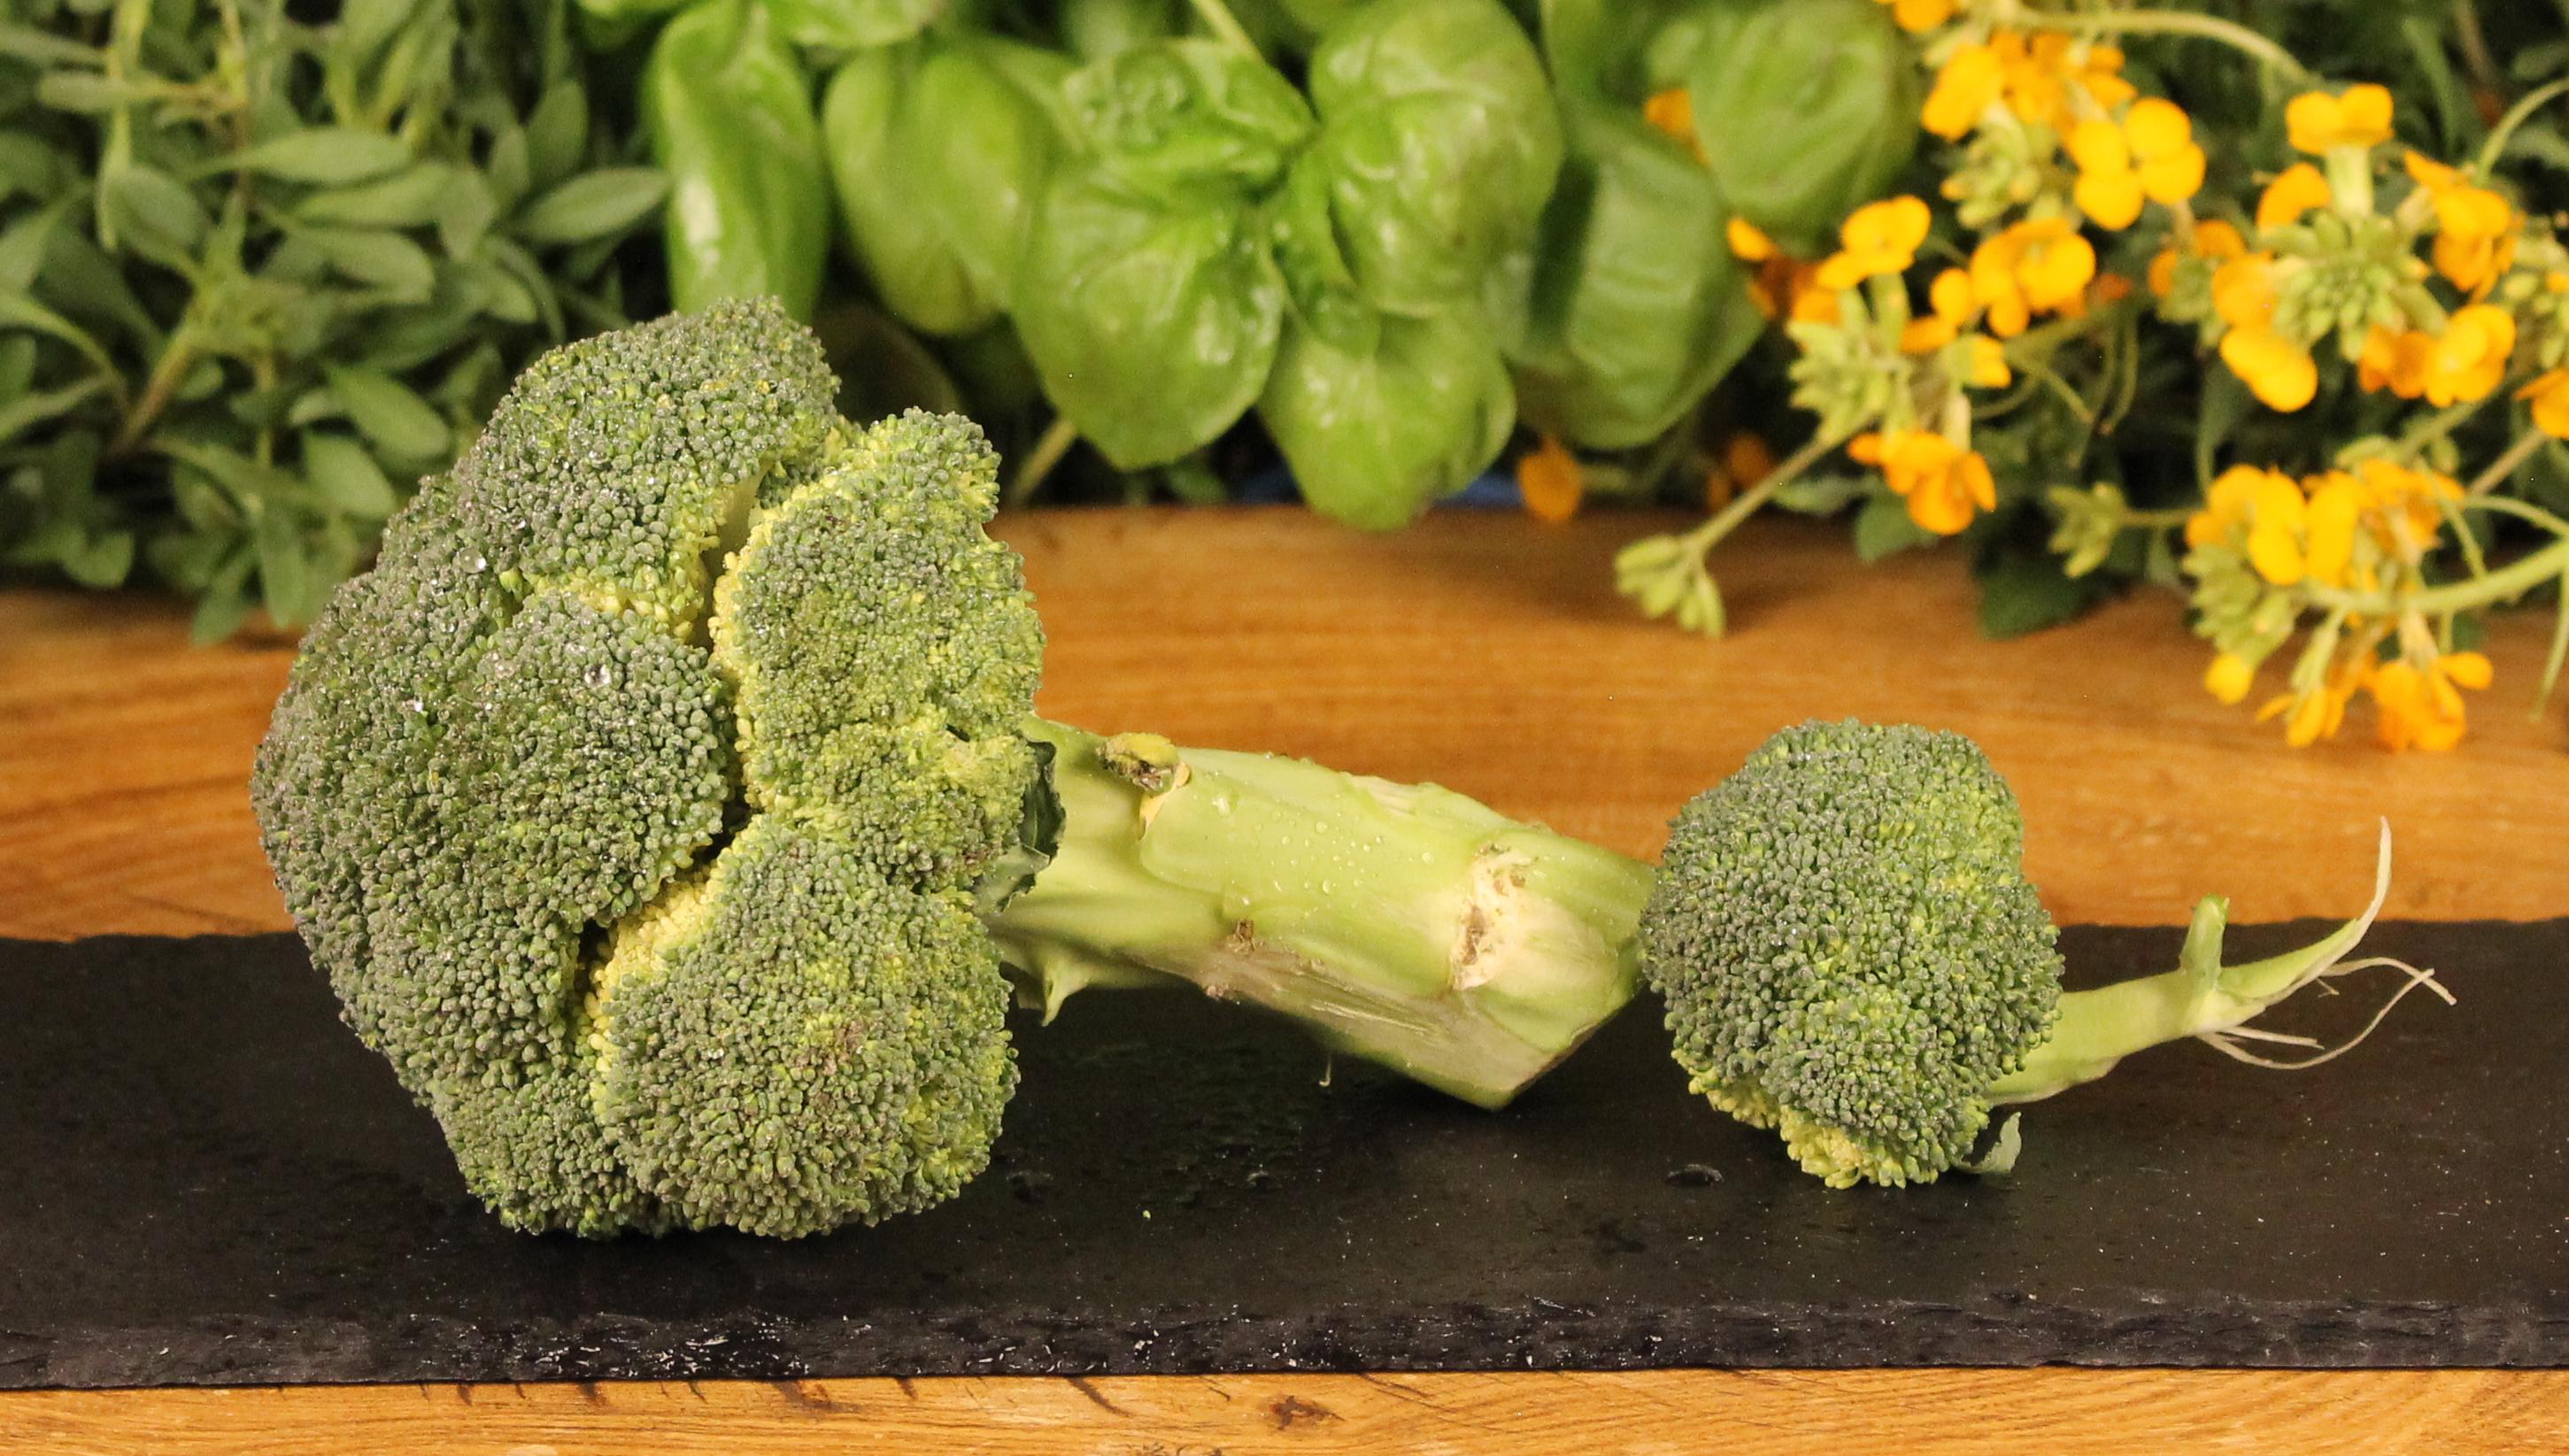 Broccoli 1 kg